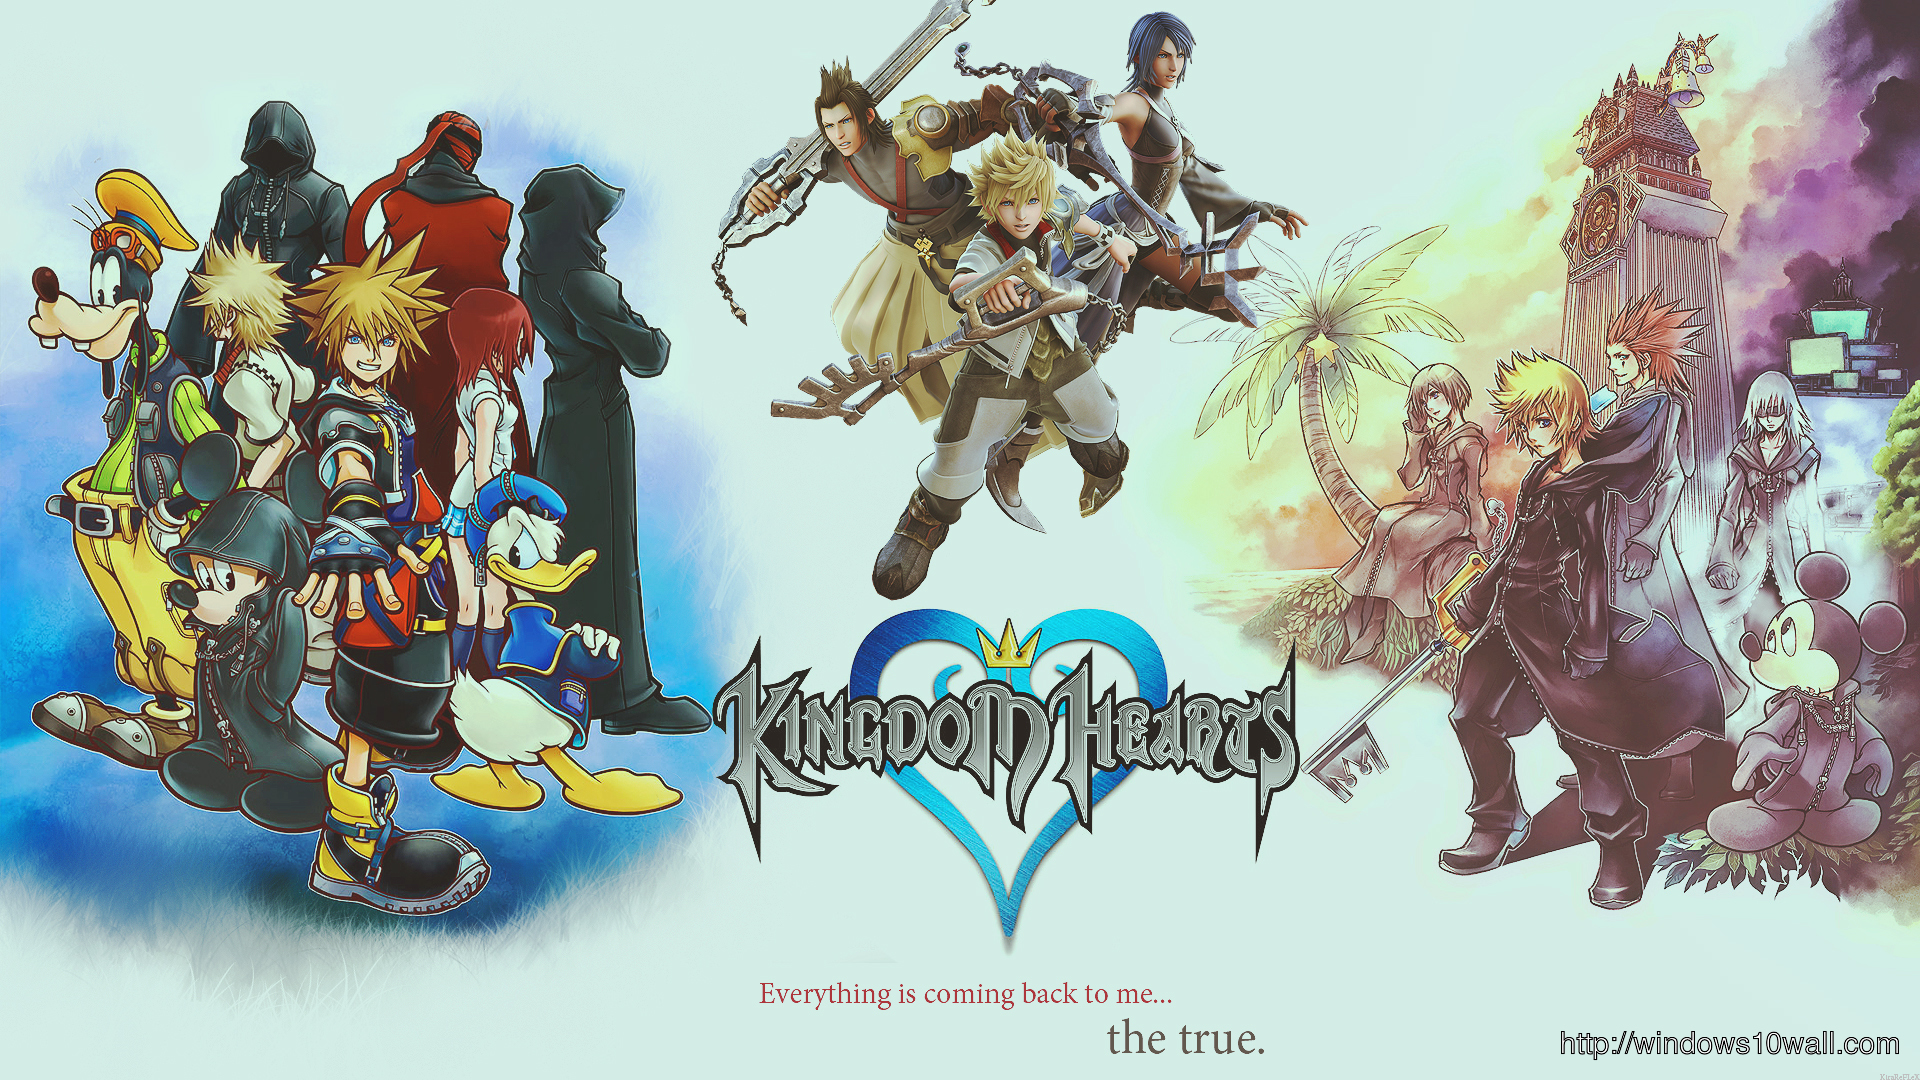 Download Kingdom Hearts Background Wallpaper